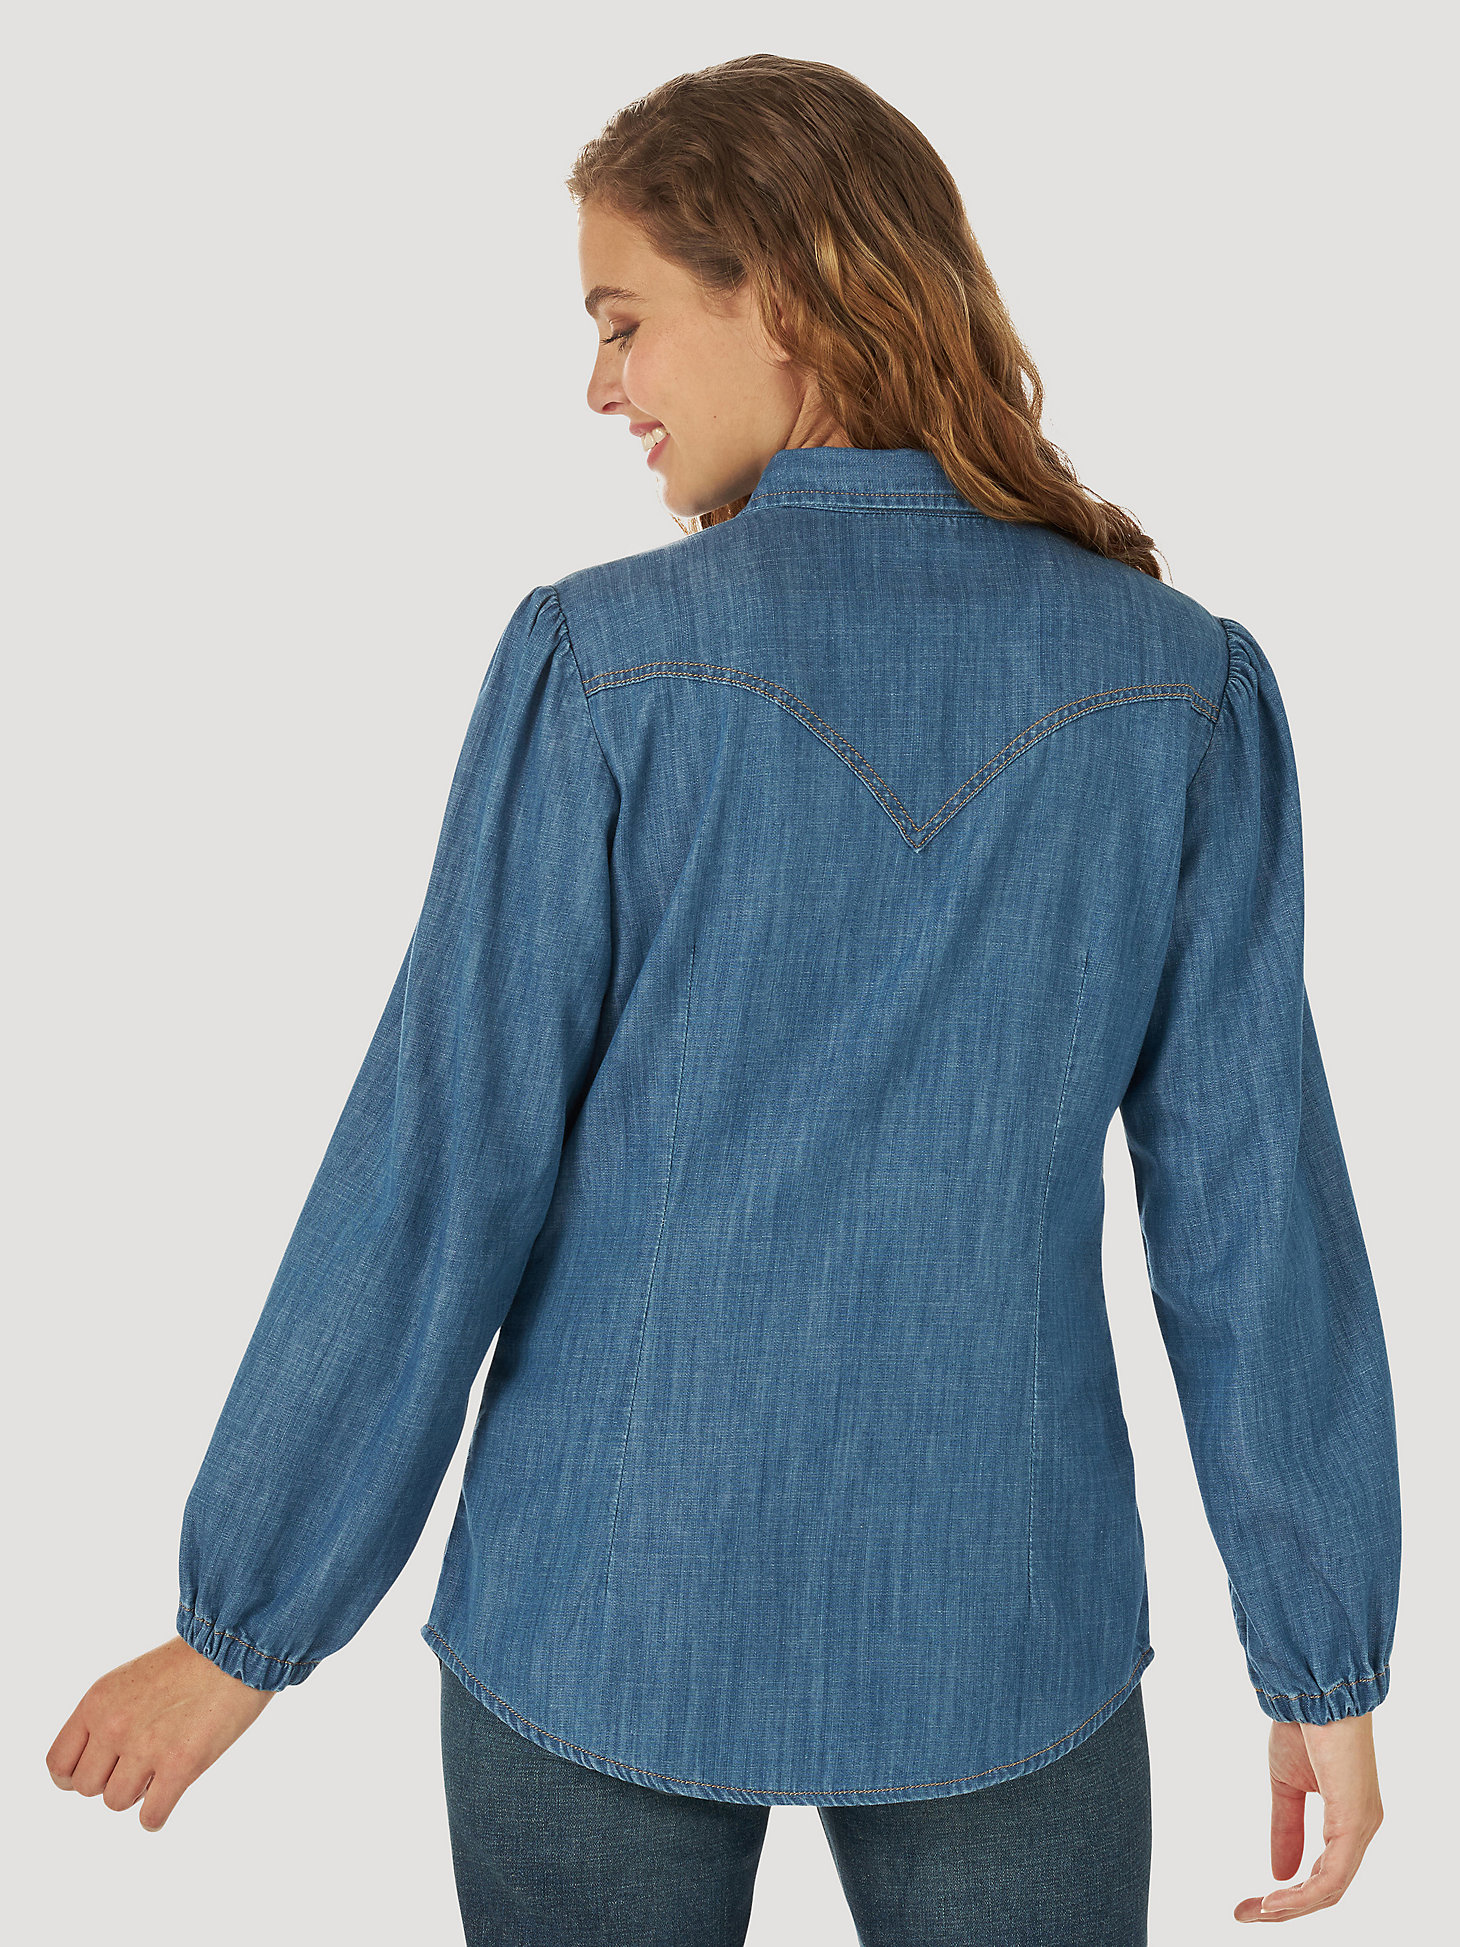 Women's Wrangler Retro® Sleeve Denim Snap Shirt in denim alternative view 3